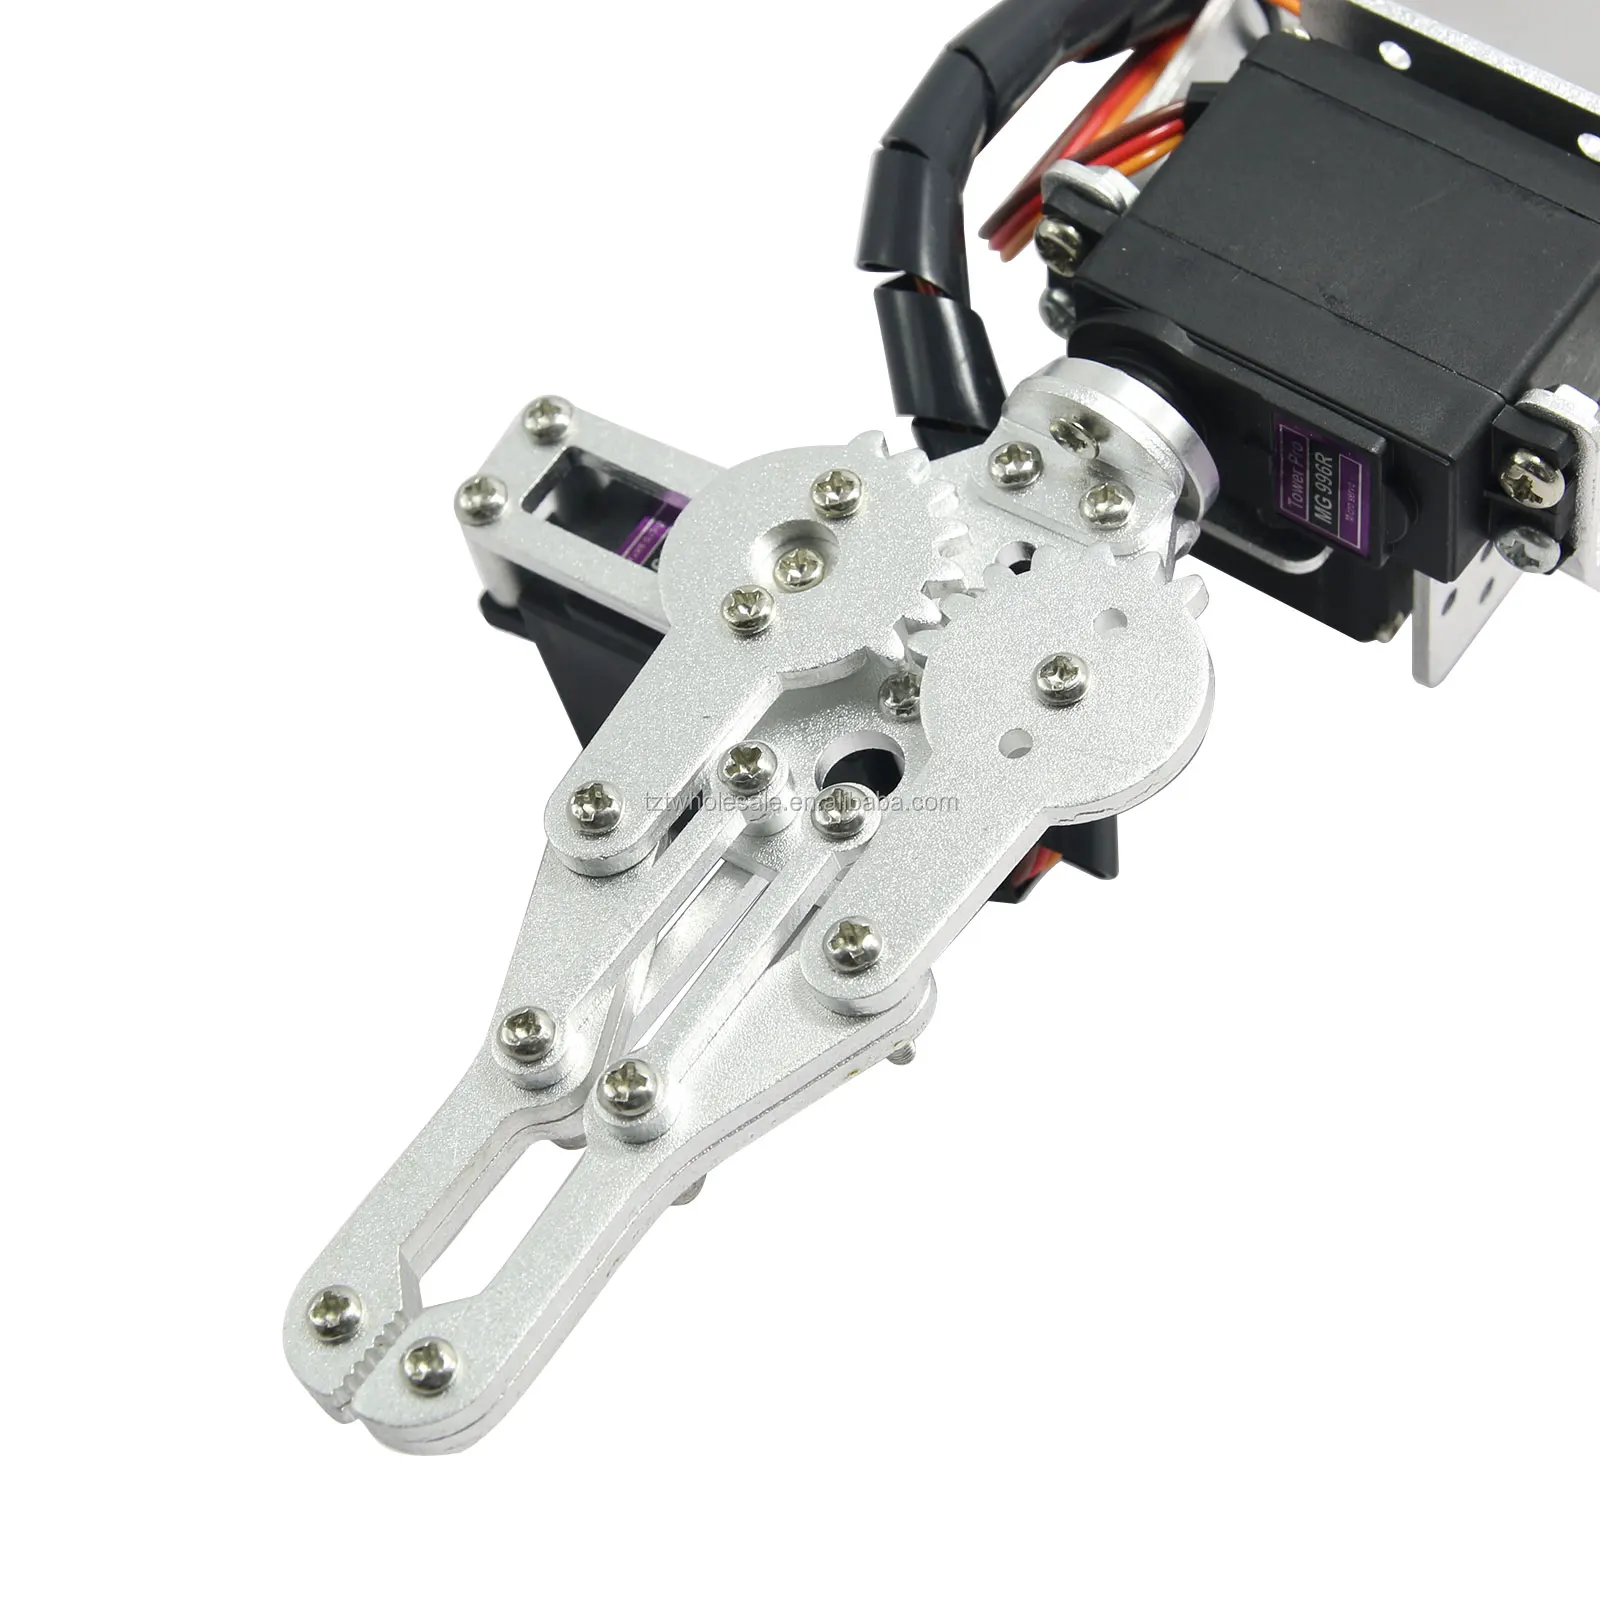 6 DOF Aluminium Robot Arm Mechanical Robotic Clamp Claw ROT3U For Arduino-Silver 